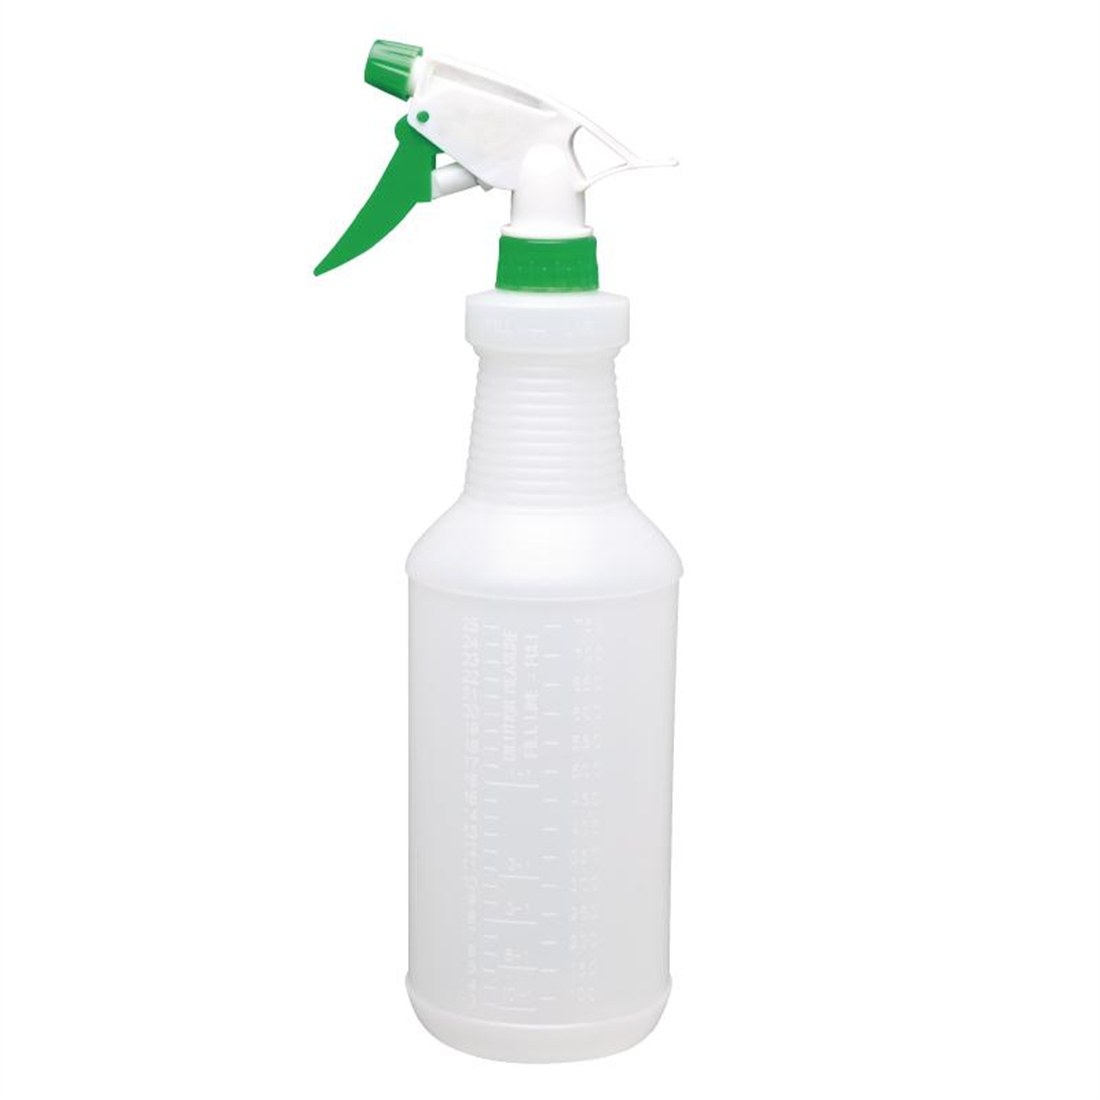 Jantex Colour Coded Spray Bottles Green 750ml